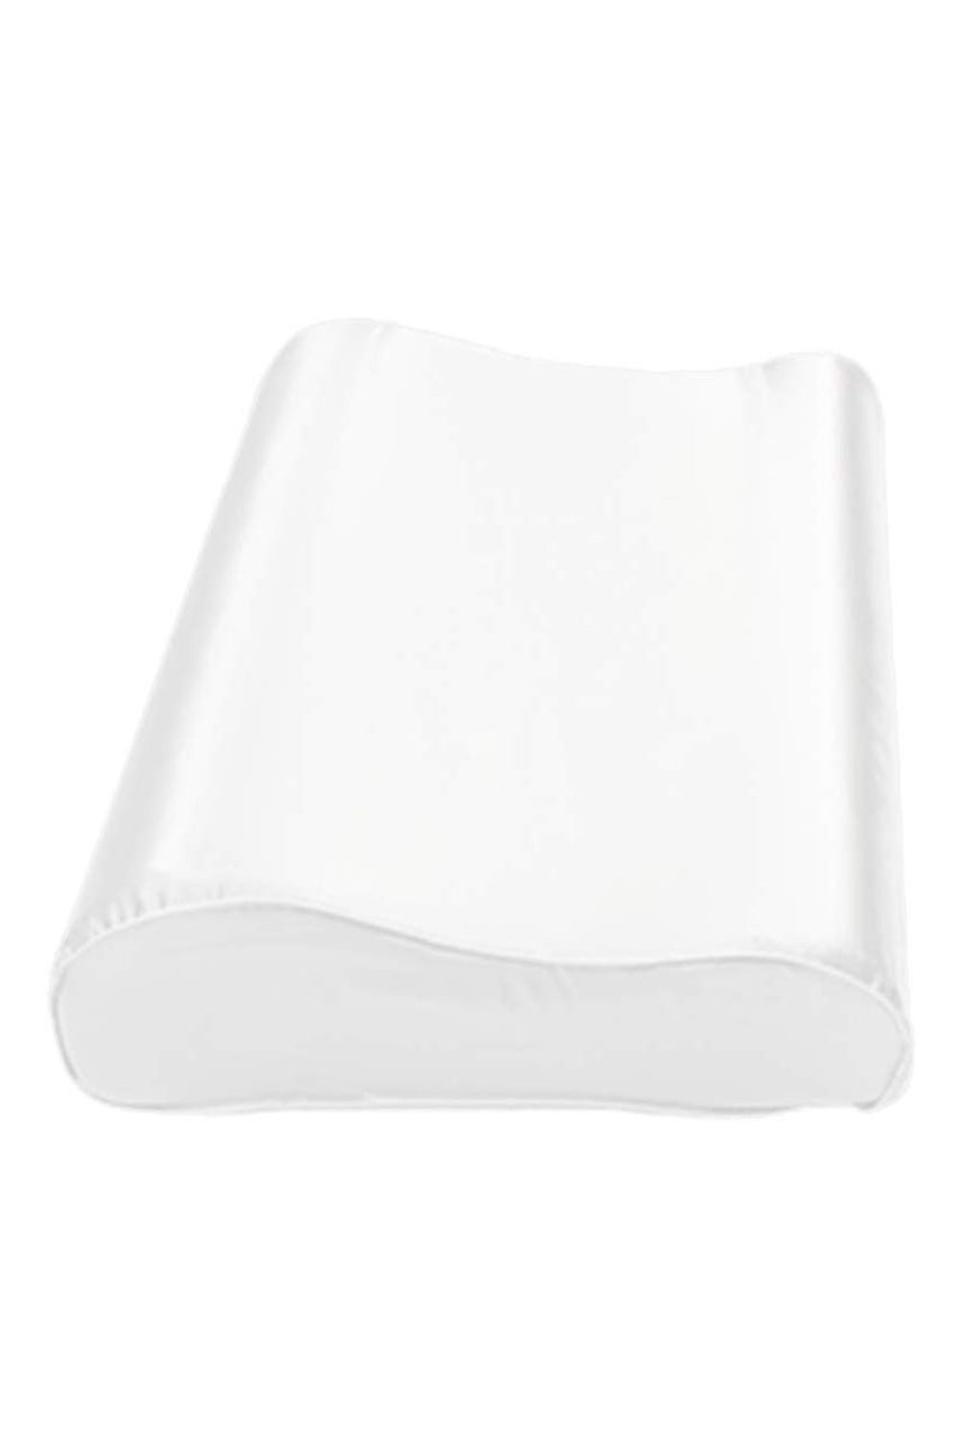 10) Cozysilk Silk Pillowcase for Memory Foam Pillow